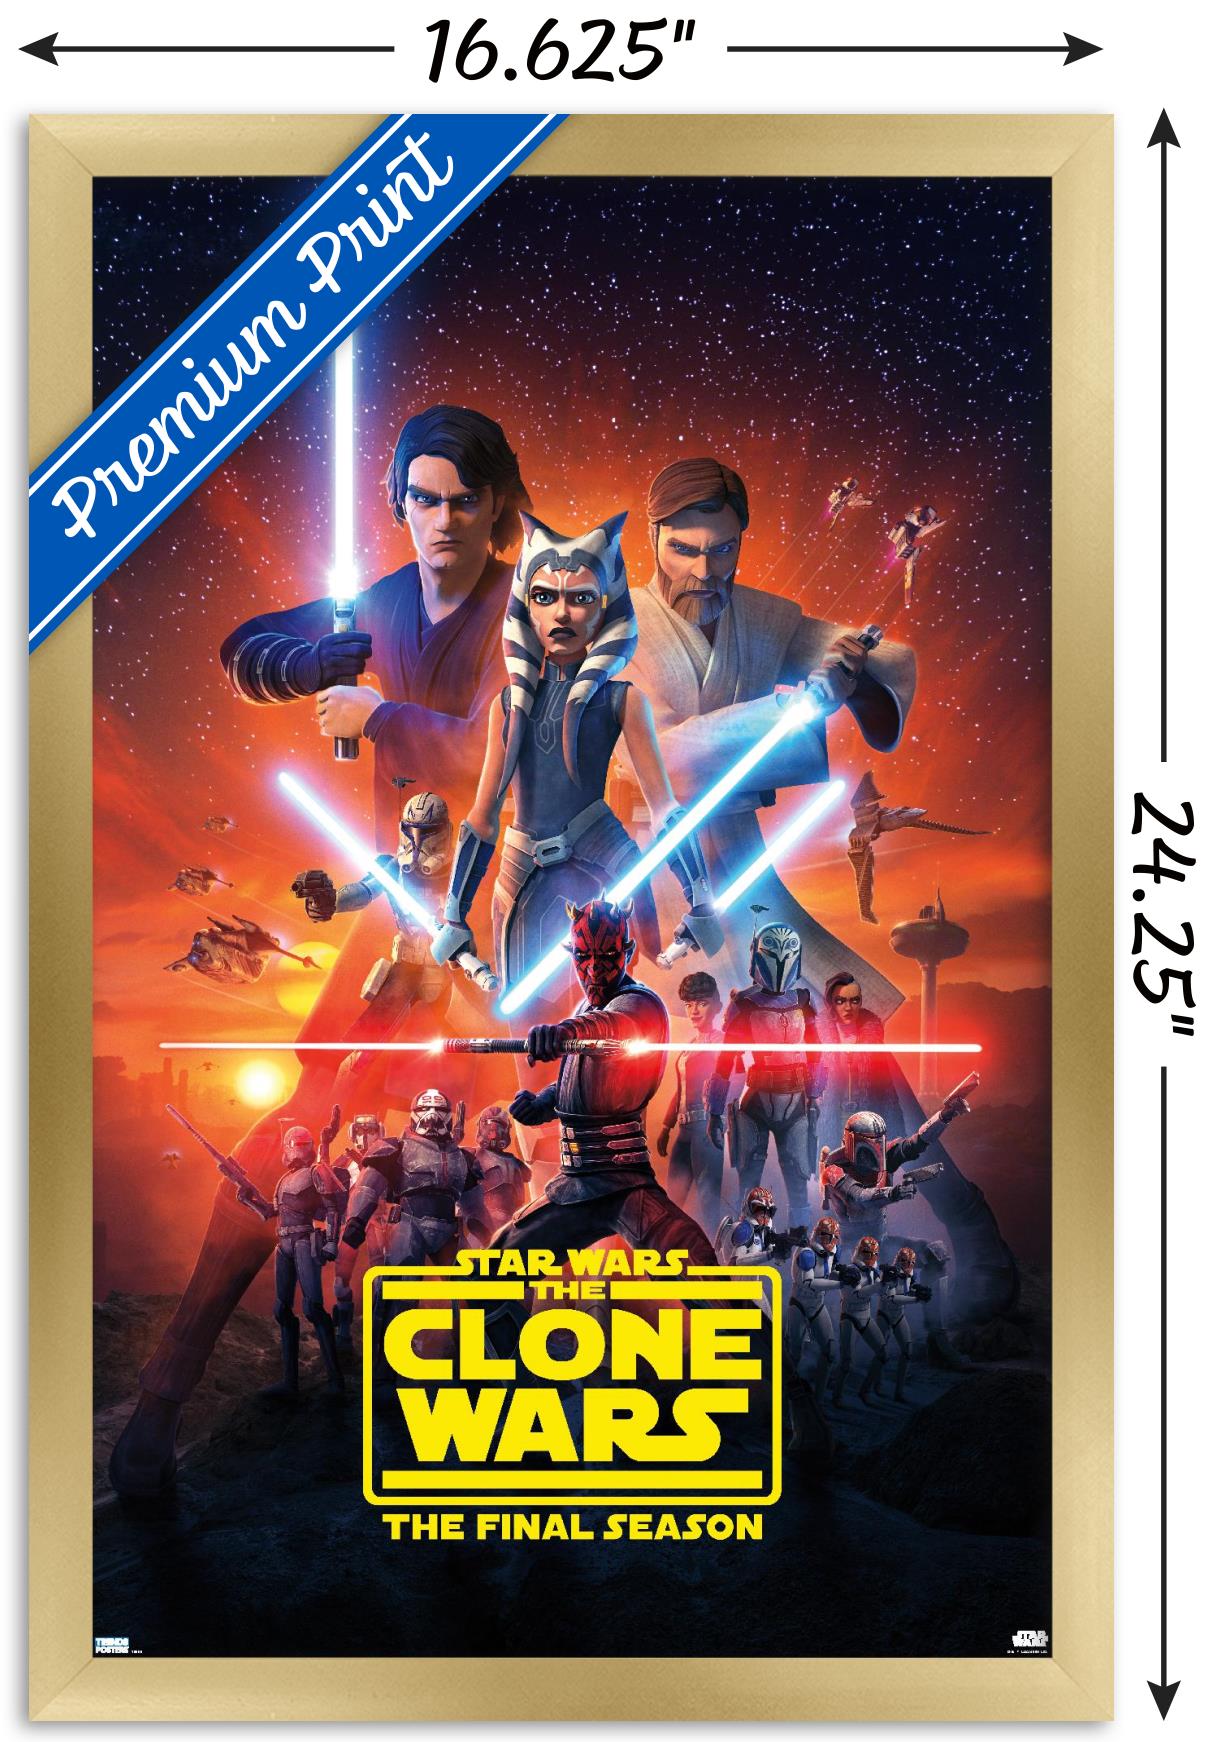 Star Wars: The Clone Wars - Season 7 Key Art Wall Poster, 14.725" x 22.375", Framed - image 3 of 5